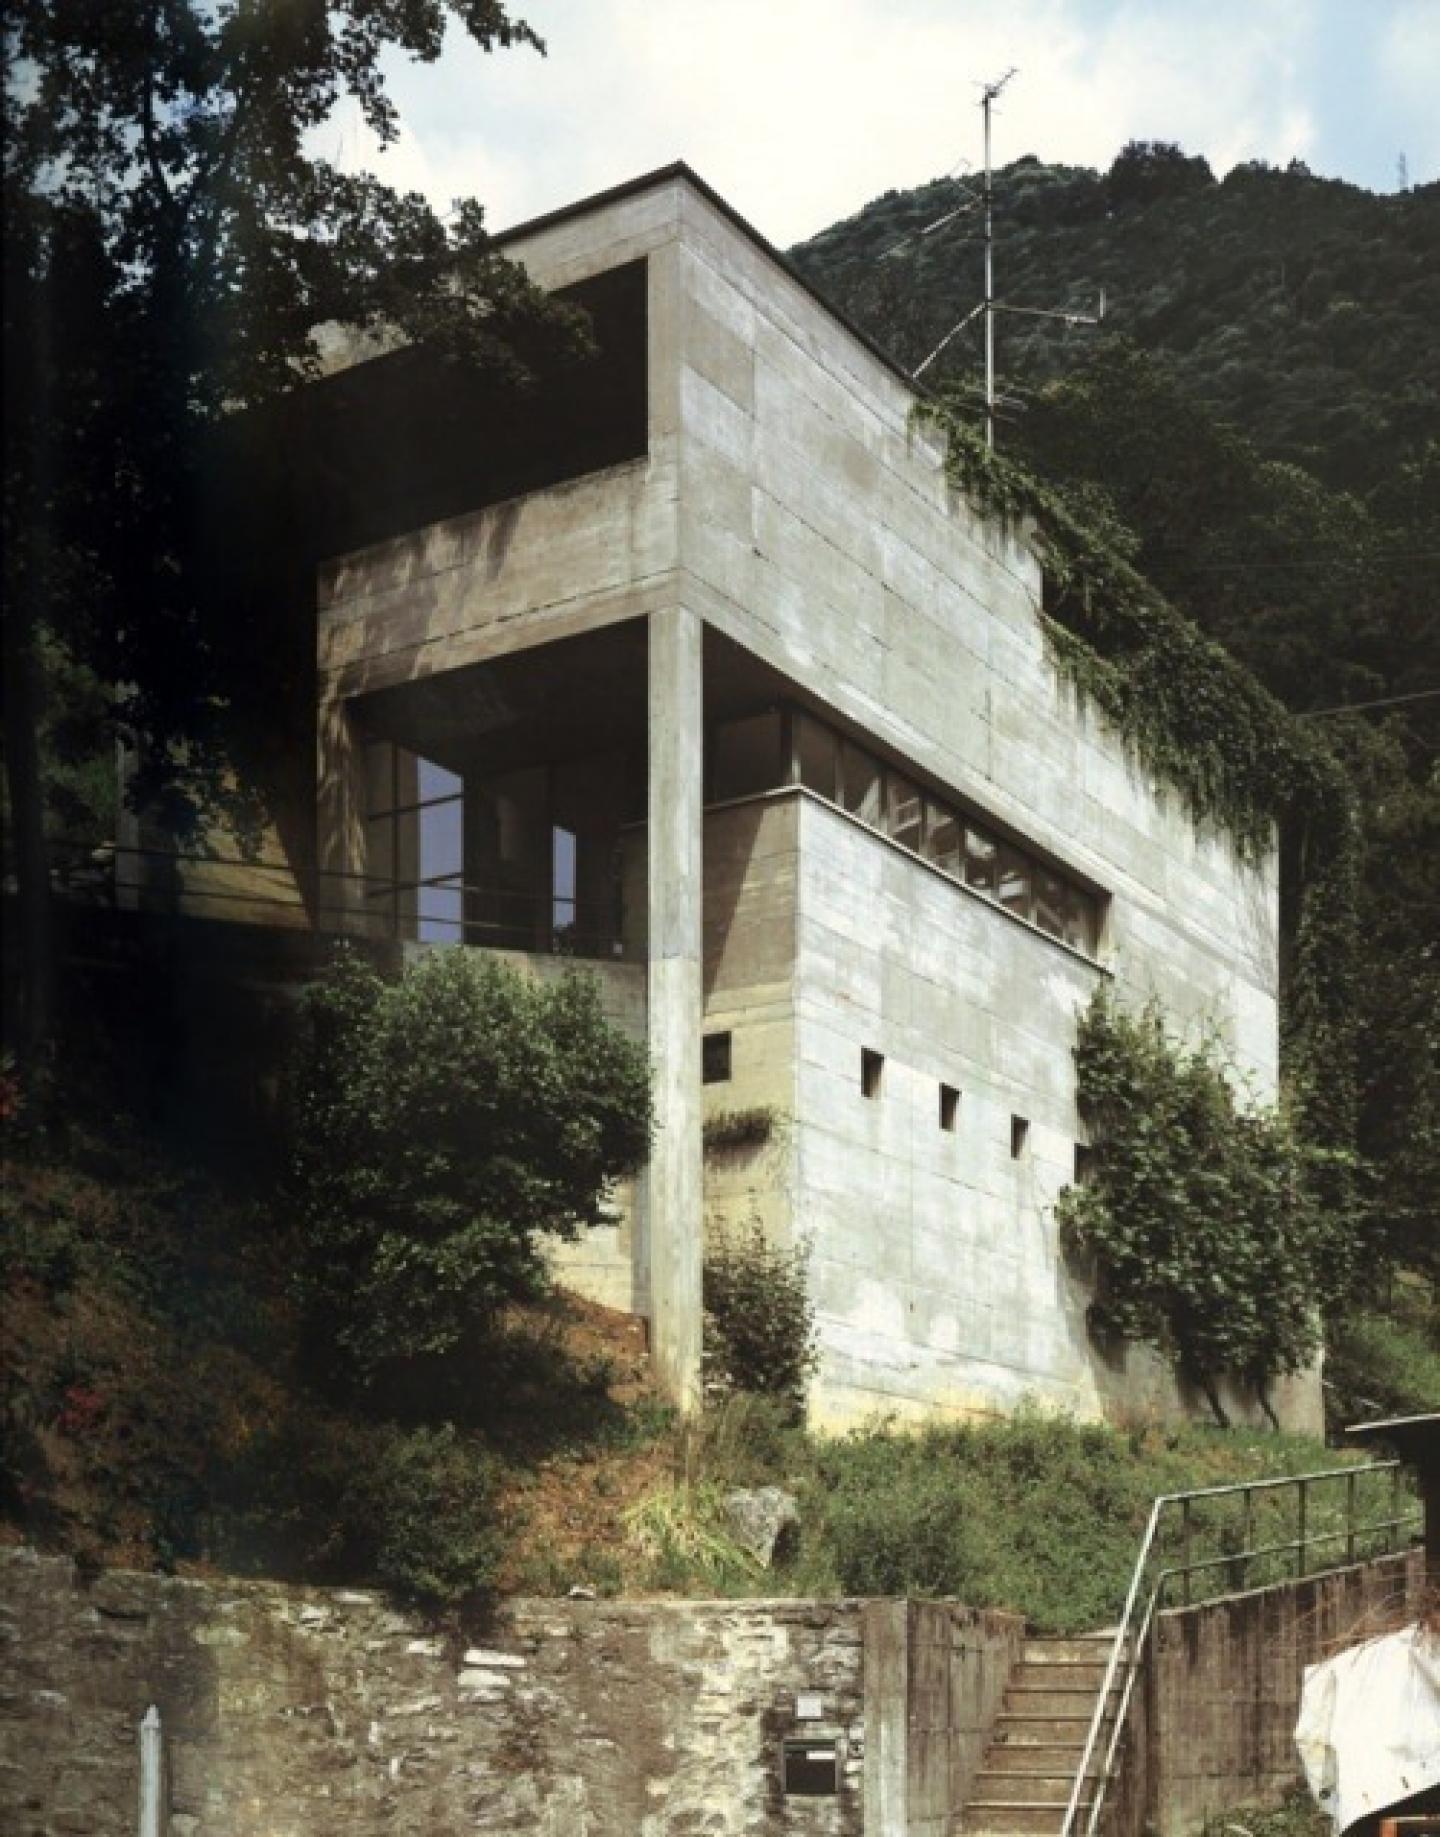  Casa Kalmann, Luigi Snozzi, Brione sopra Minusio, 1976